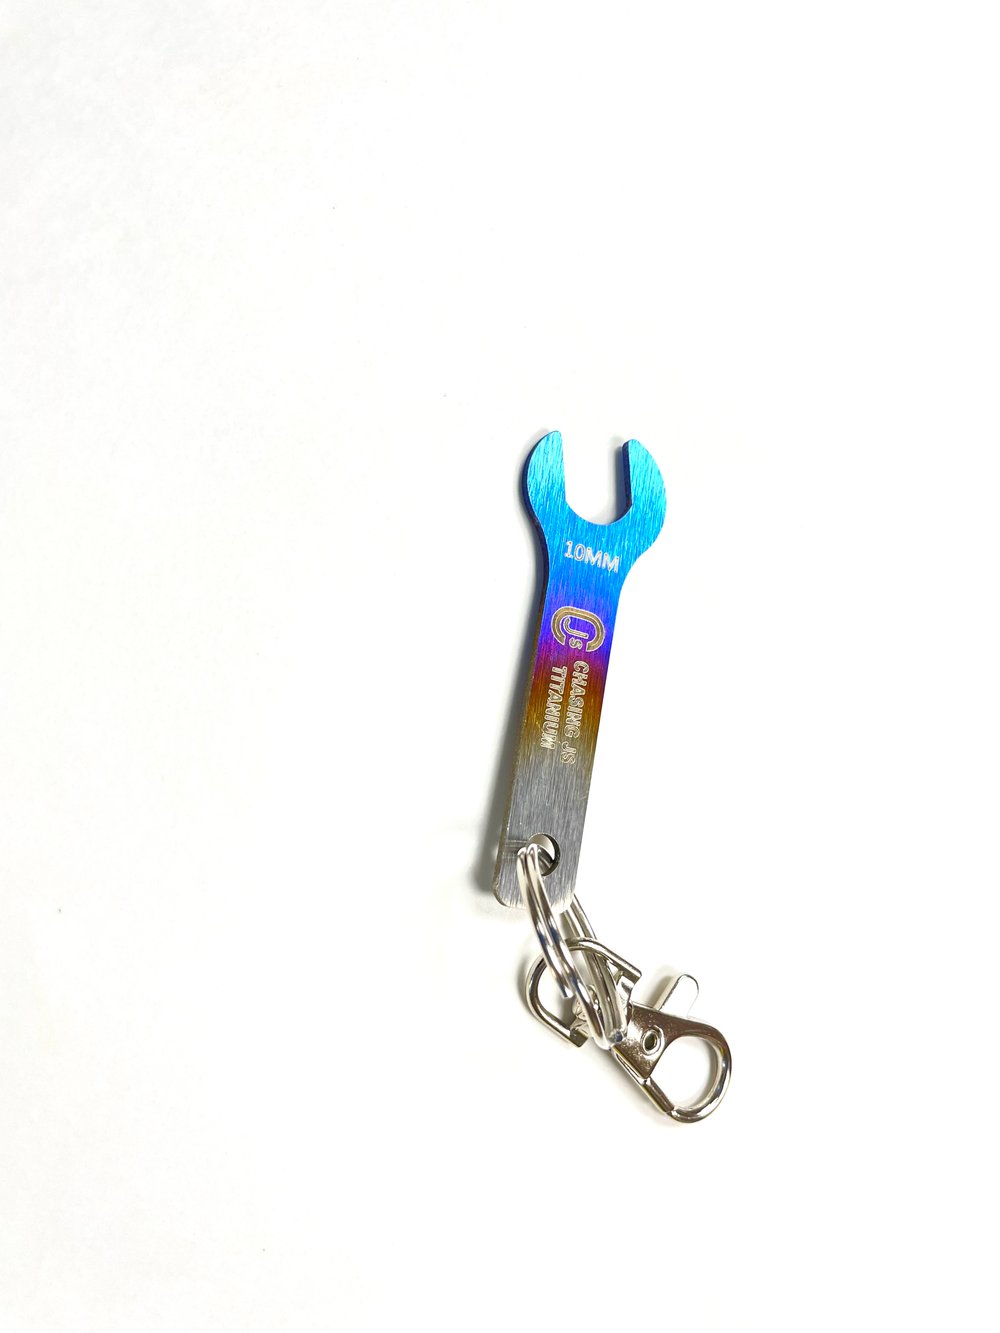 Chasing JS Titanium 10mm Wrench Keychain